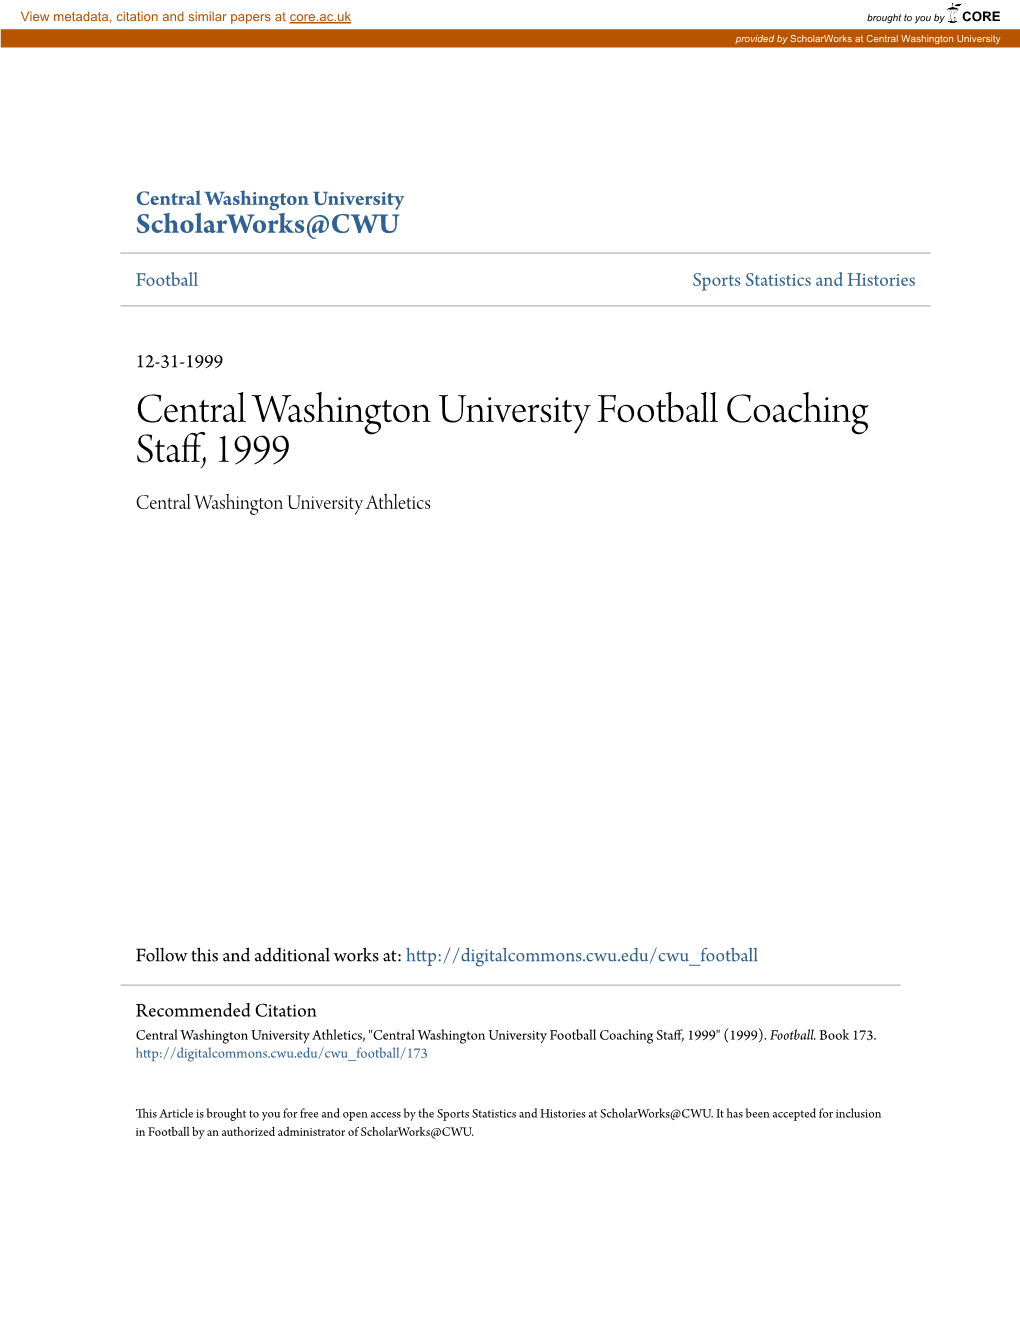 Central Washington University Football Coaching Staff, 1999 Central Washington University Athletics